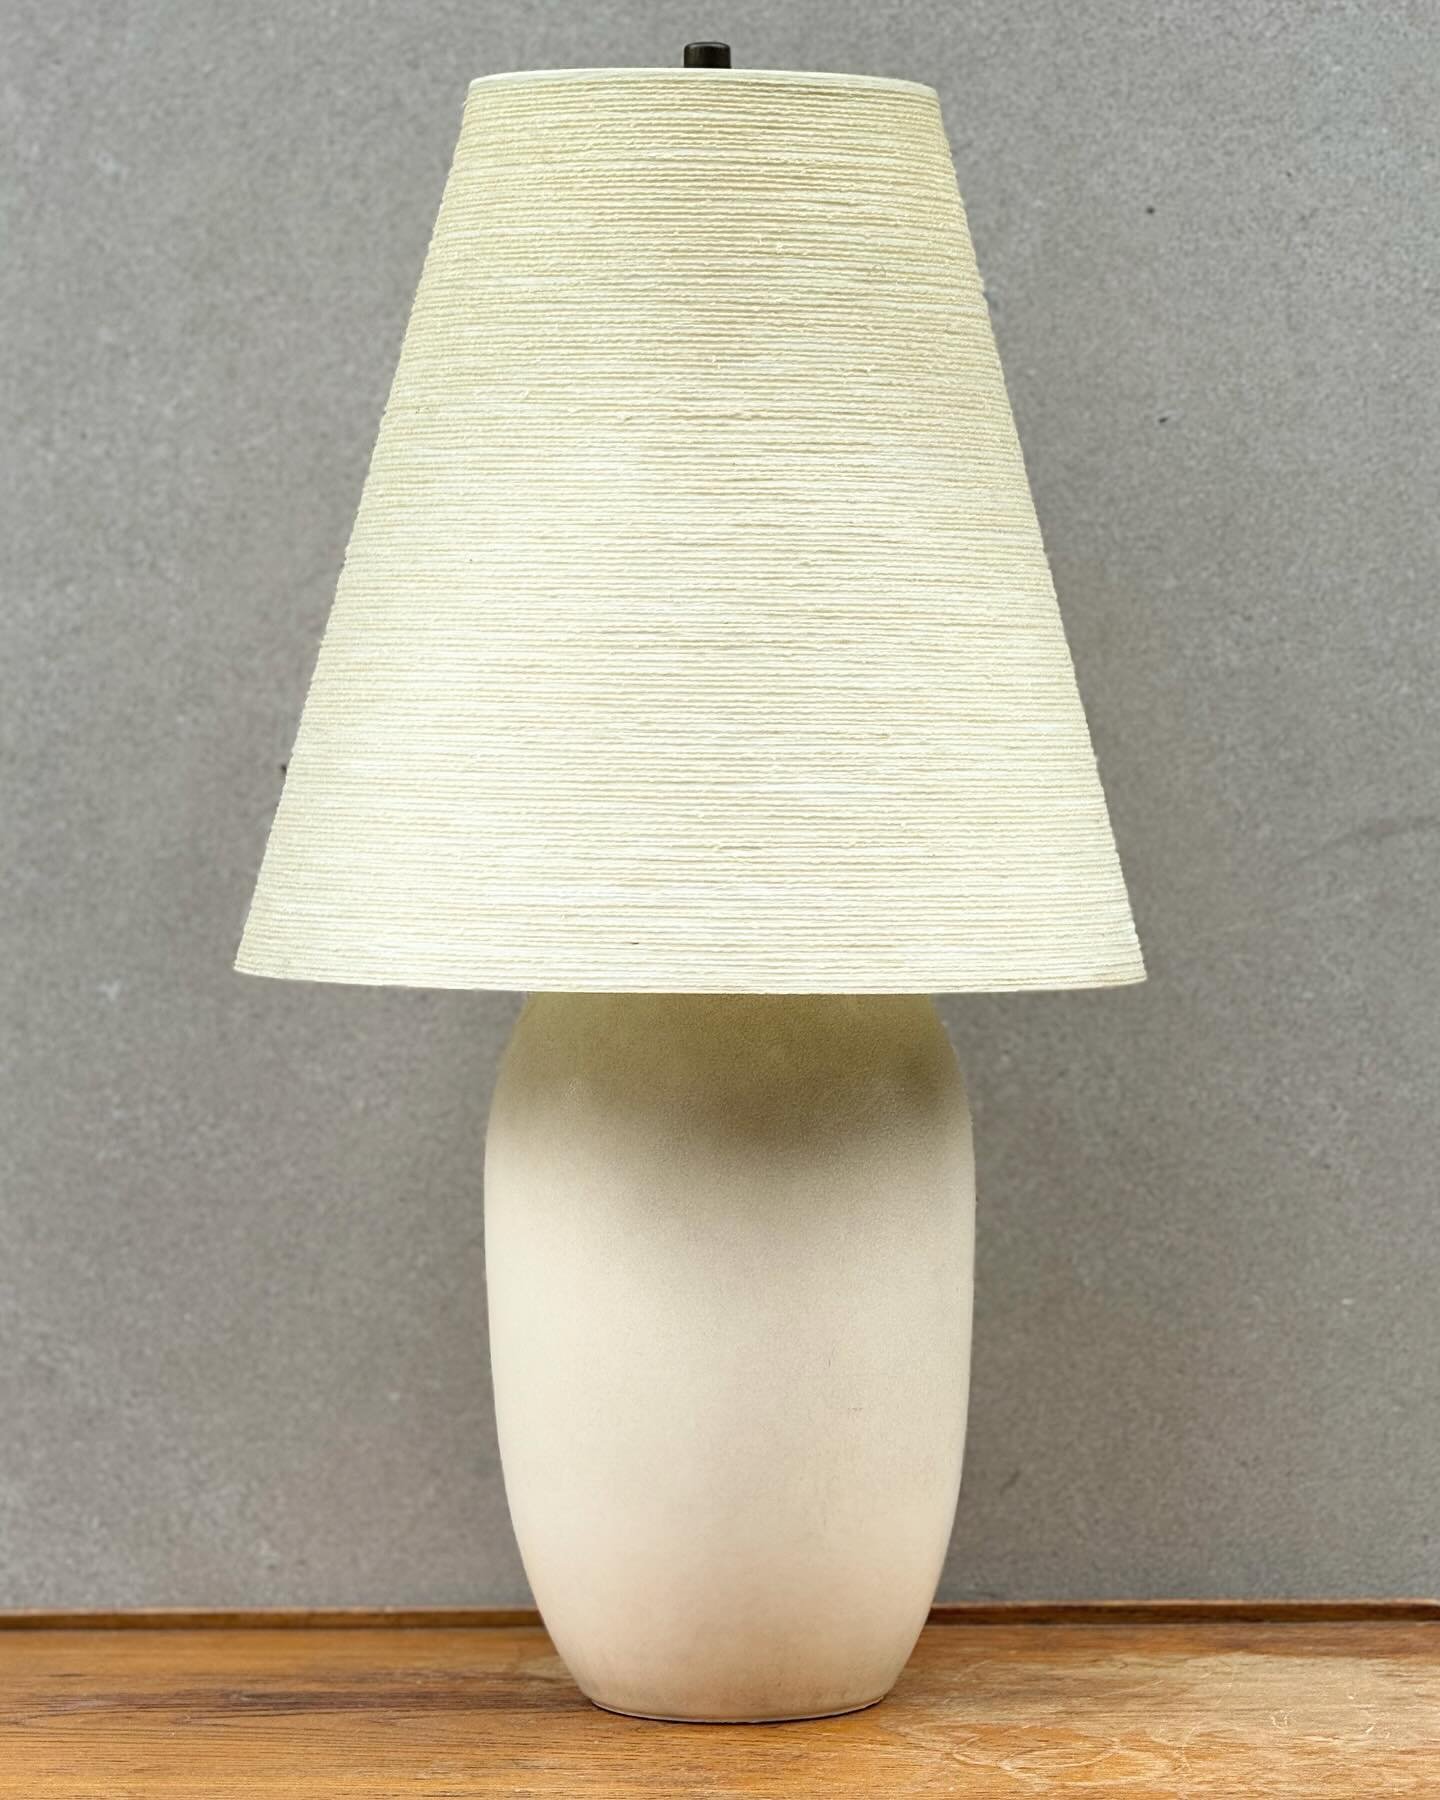 Vintage Ceramic Lamp Designed by Lotte &amp; Gunnar Bostulund &bull; feat. their unique fiberglass shade designed by their son Morten &bull; c. 1960&rsquo;s &bull; SOLD
&bull;
&bull;
&bull;
&bull;
&bull;
#lottelamp #danishdesign #midcenturylamp #fibe